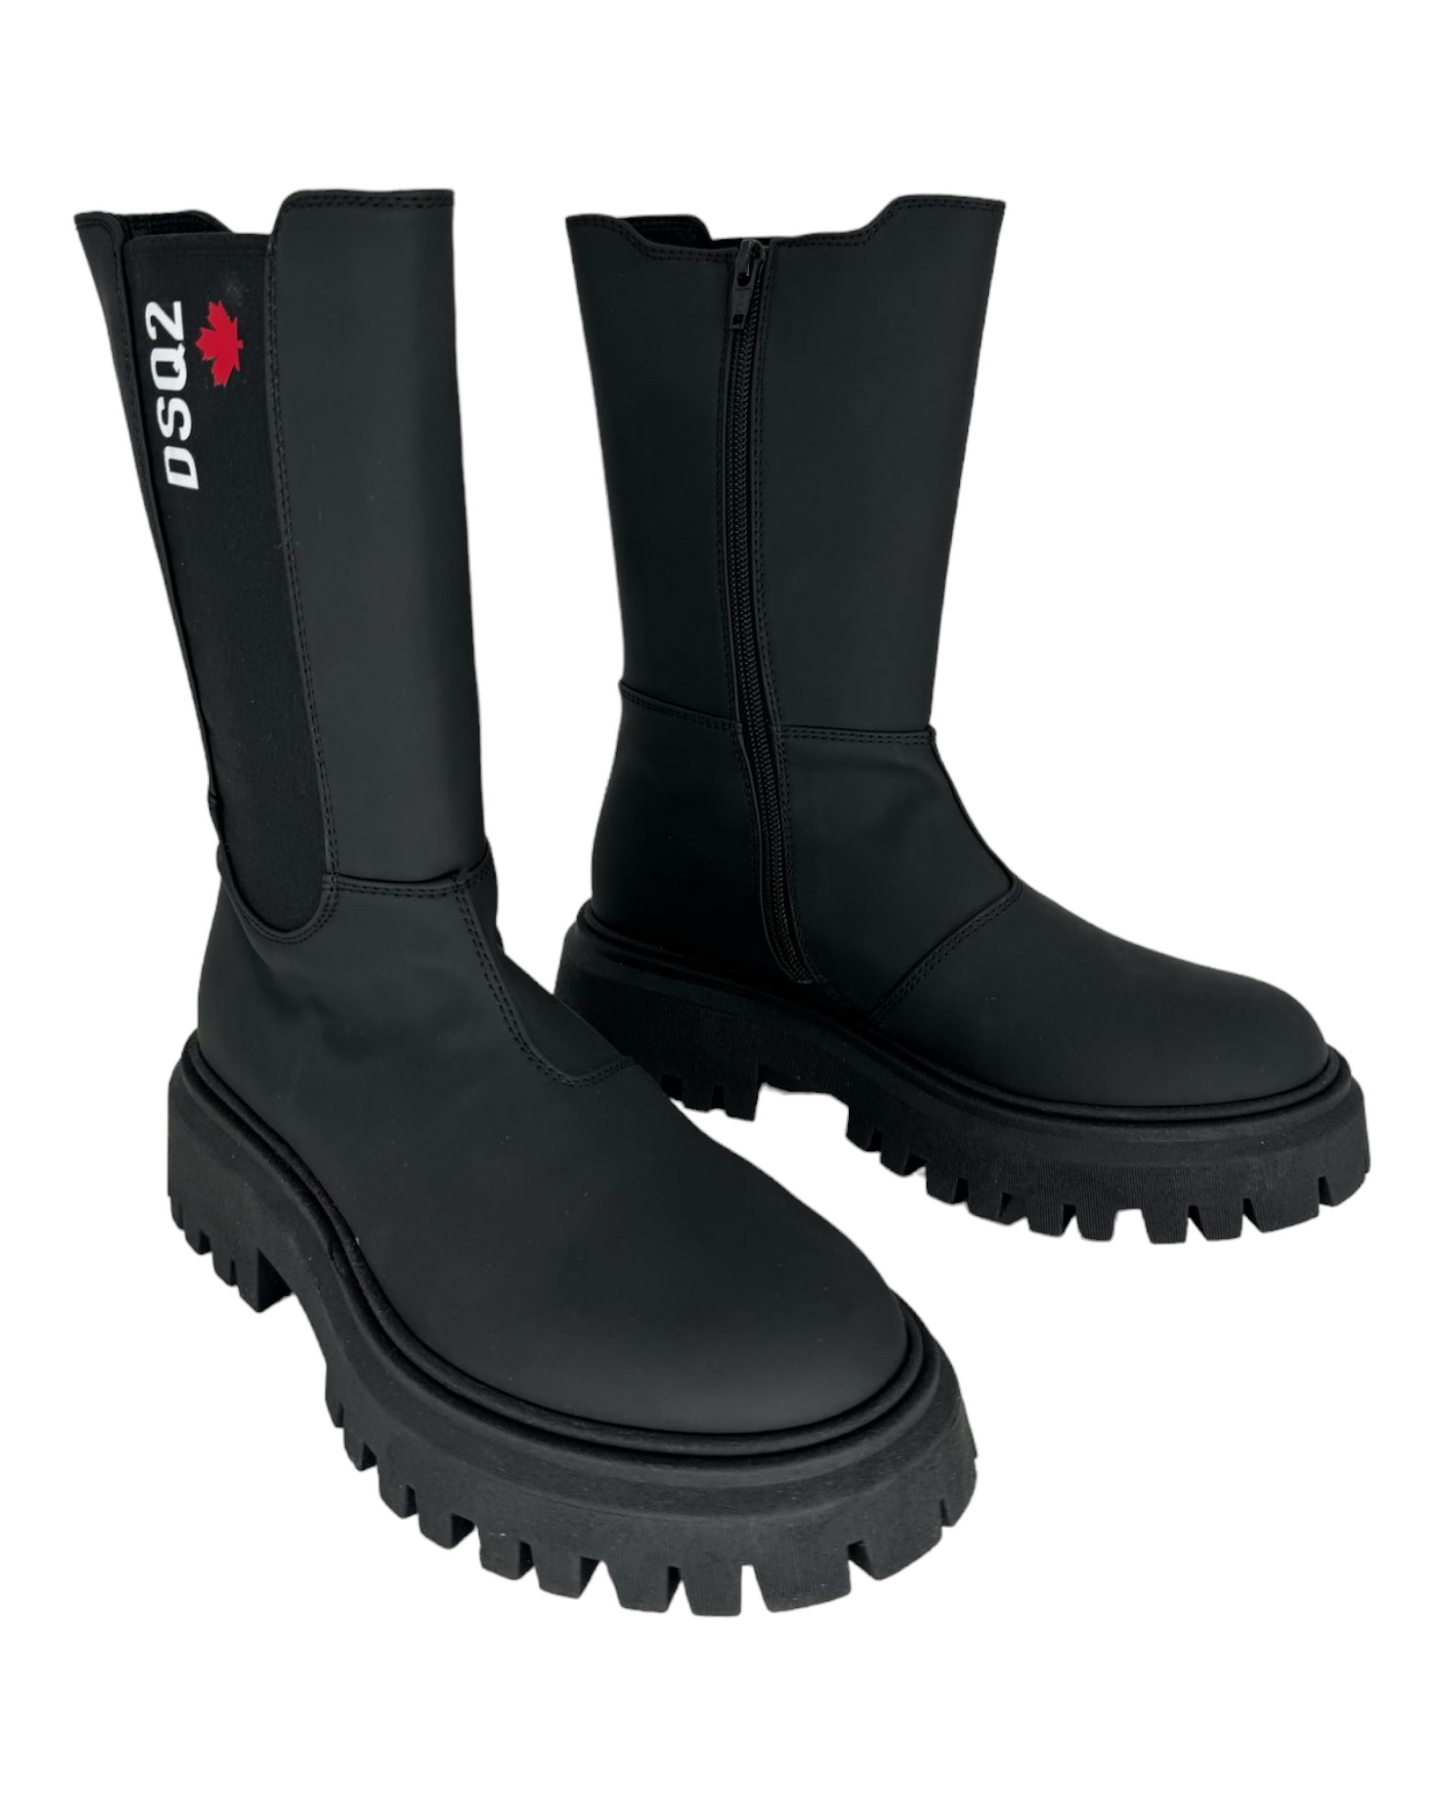 Rubber boot/ Wellingtons